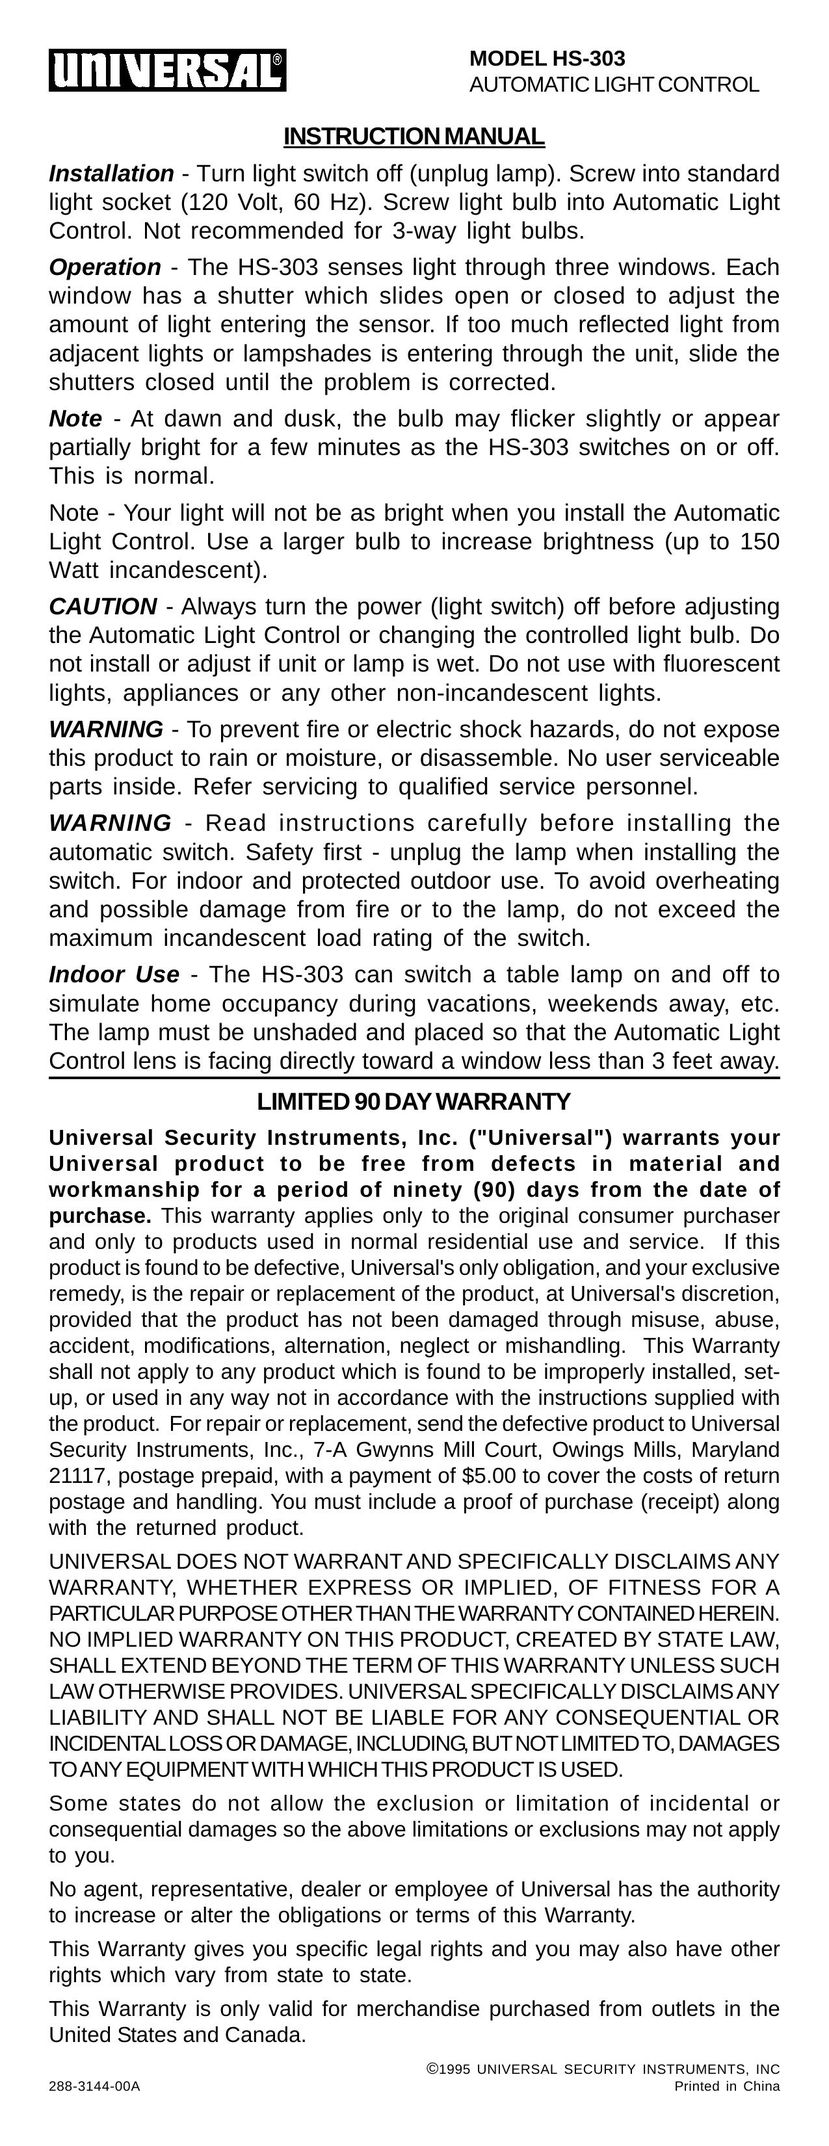 Universal HS-303 Indoor Furnishings User Manual